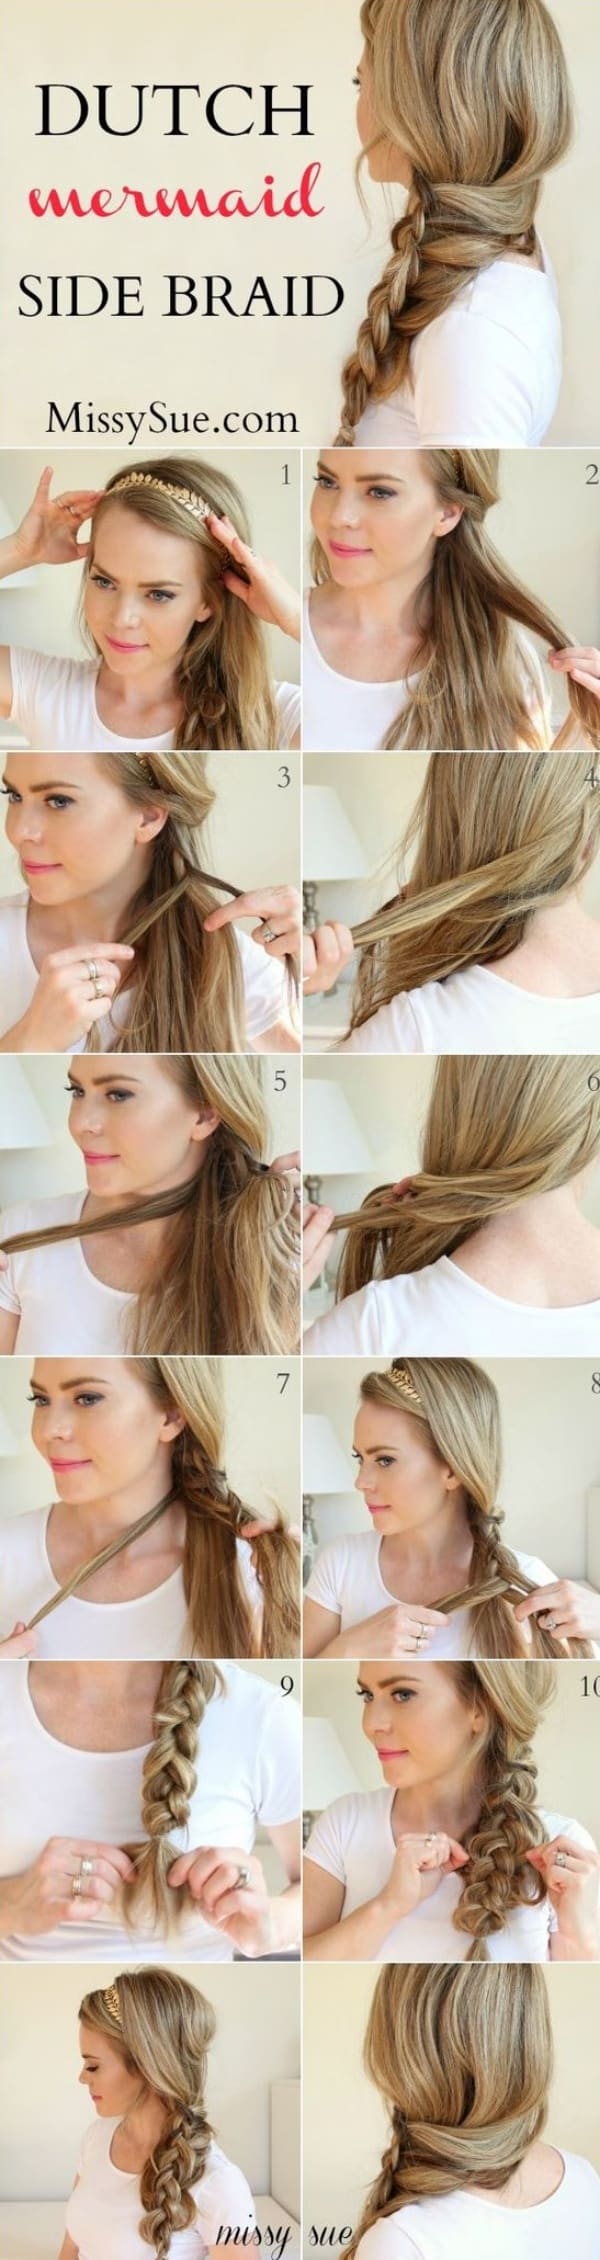 easy 5 minute hairstyles